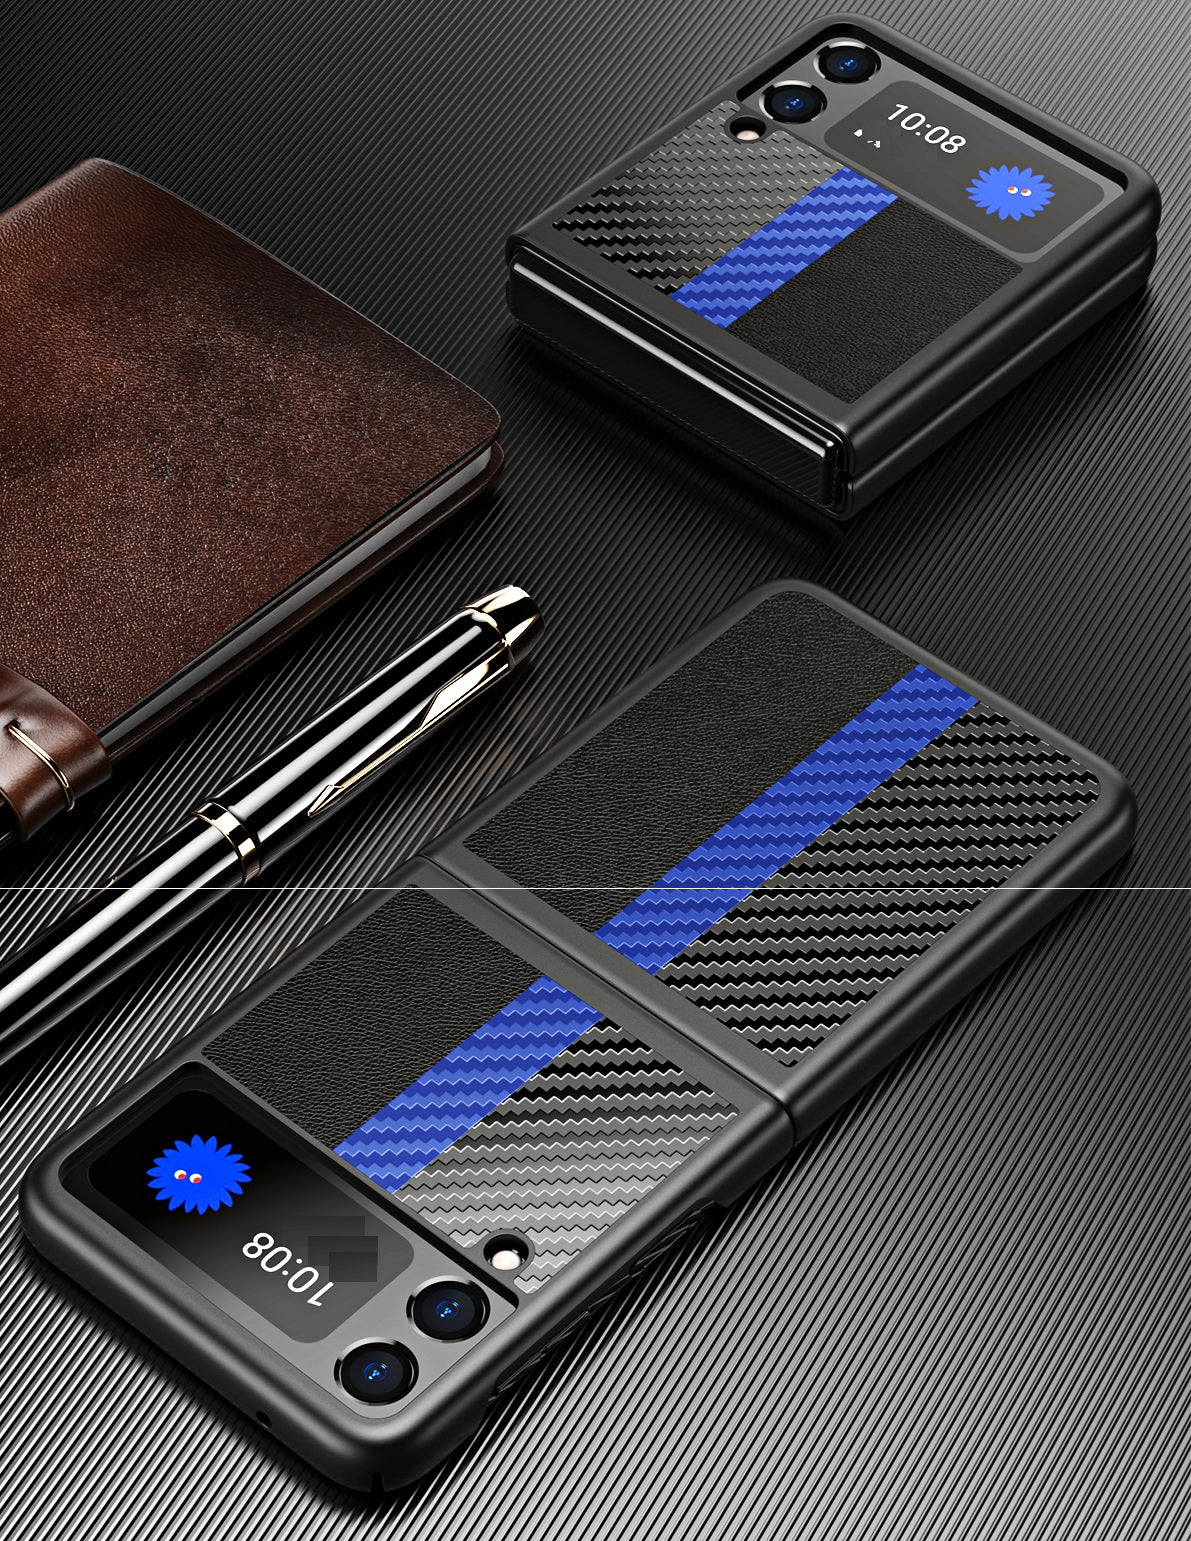 Samsung Galaxy Z Flip 4 Case : Blue Line Leather